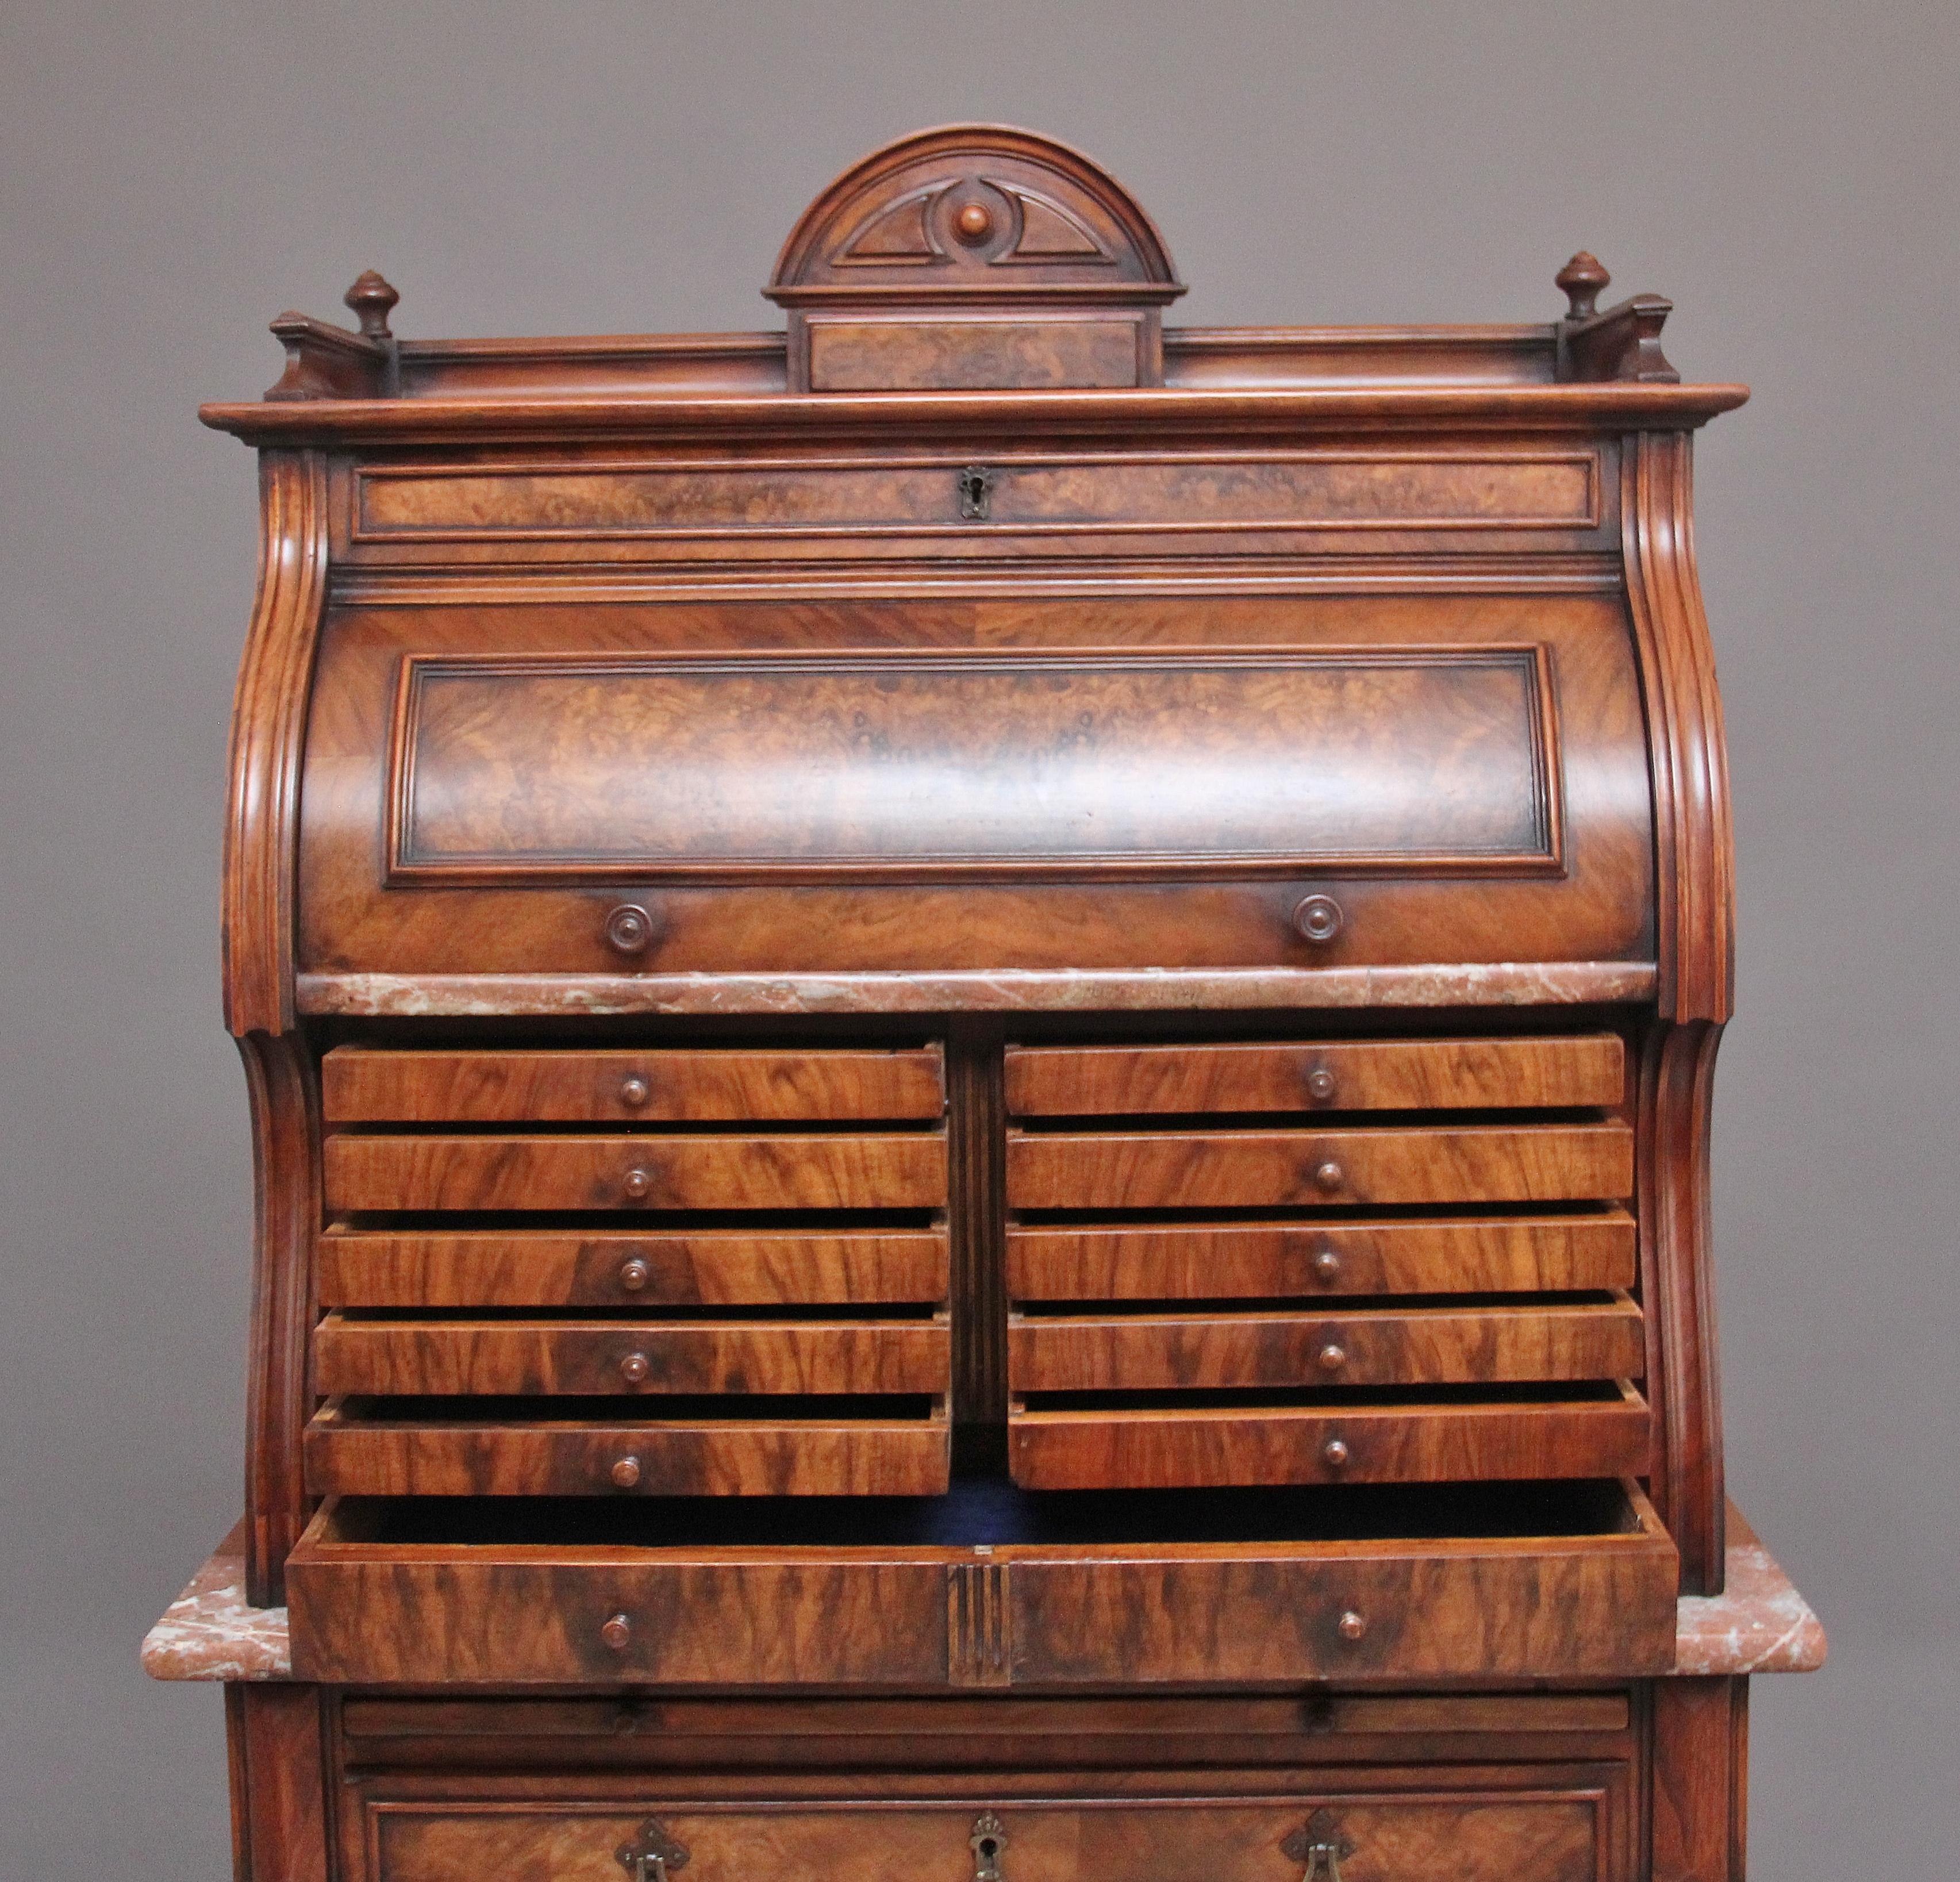 Decorative 19th Century Burr Walnut Dentist Cabinet In Good Condition For Sale In Martlesham, GB